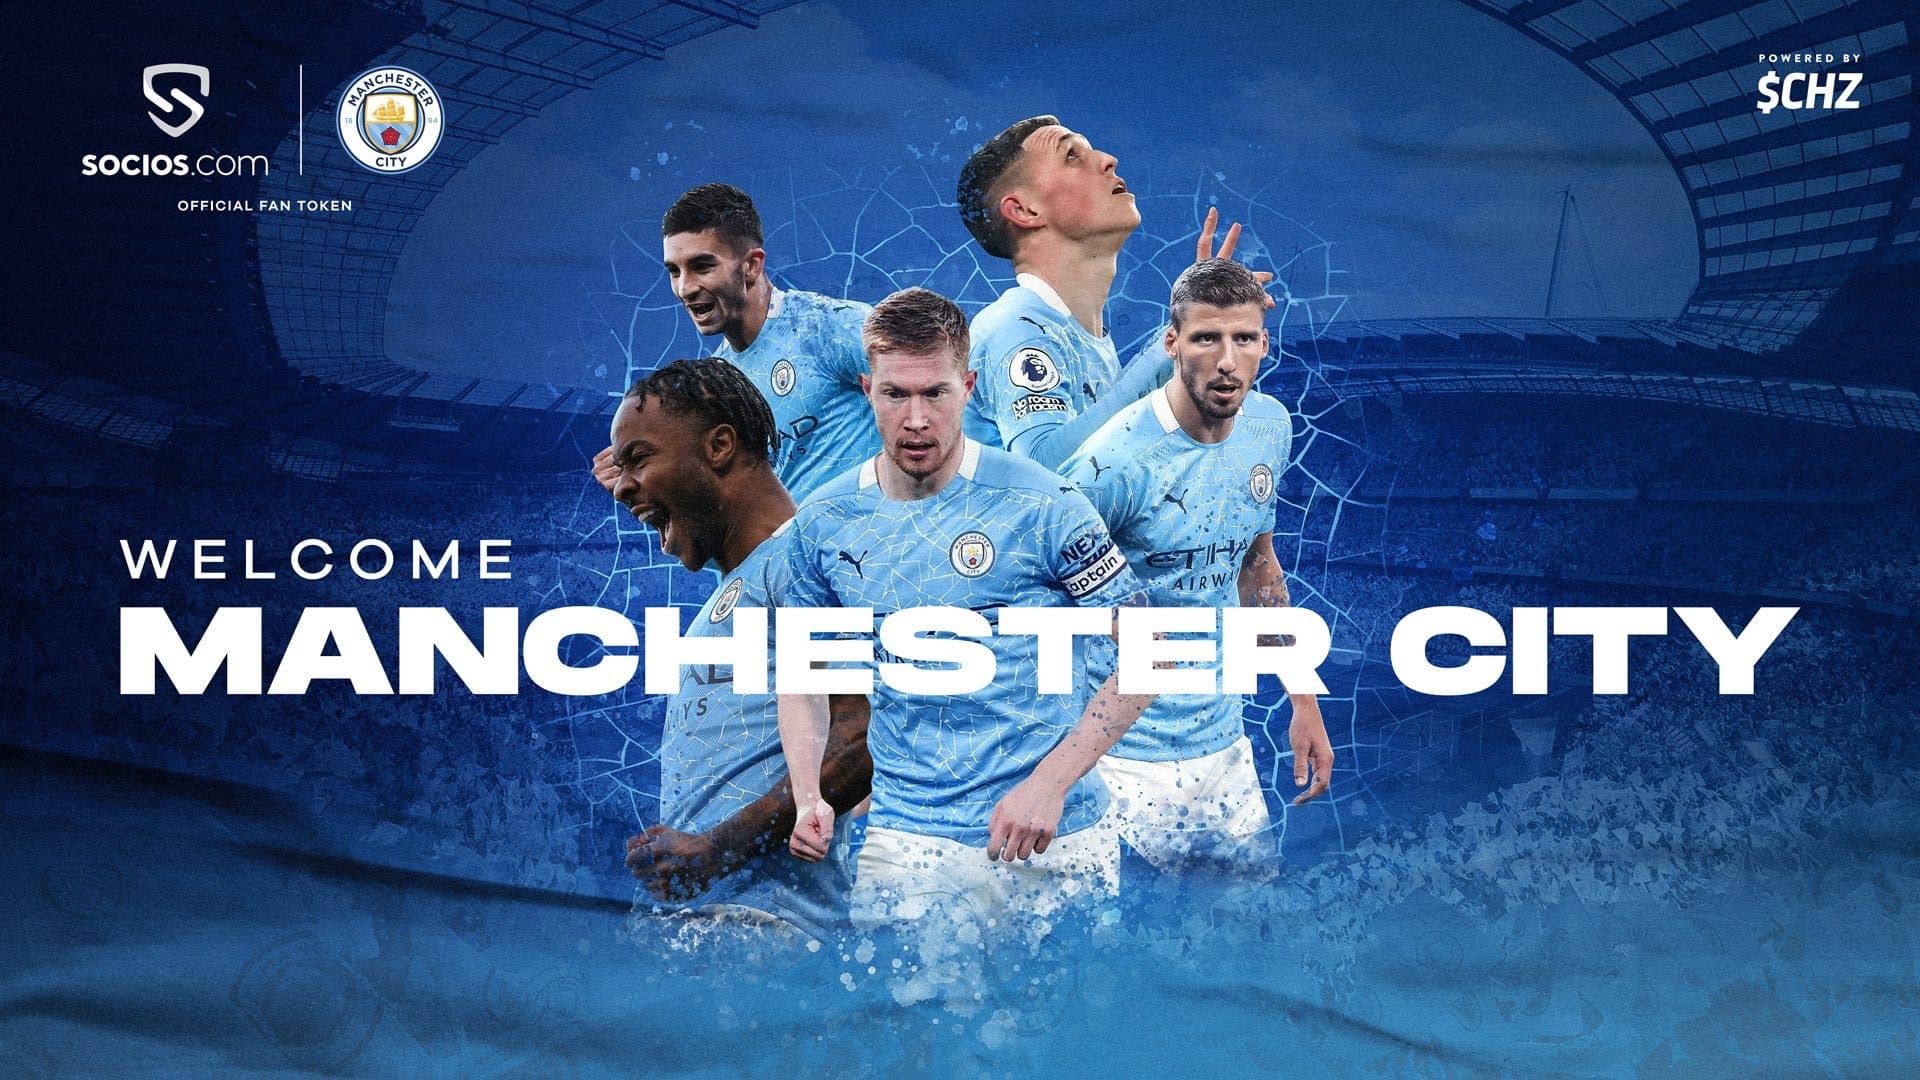 Manchester City lancerer fantoken på Socios.com